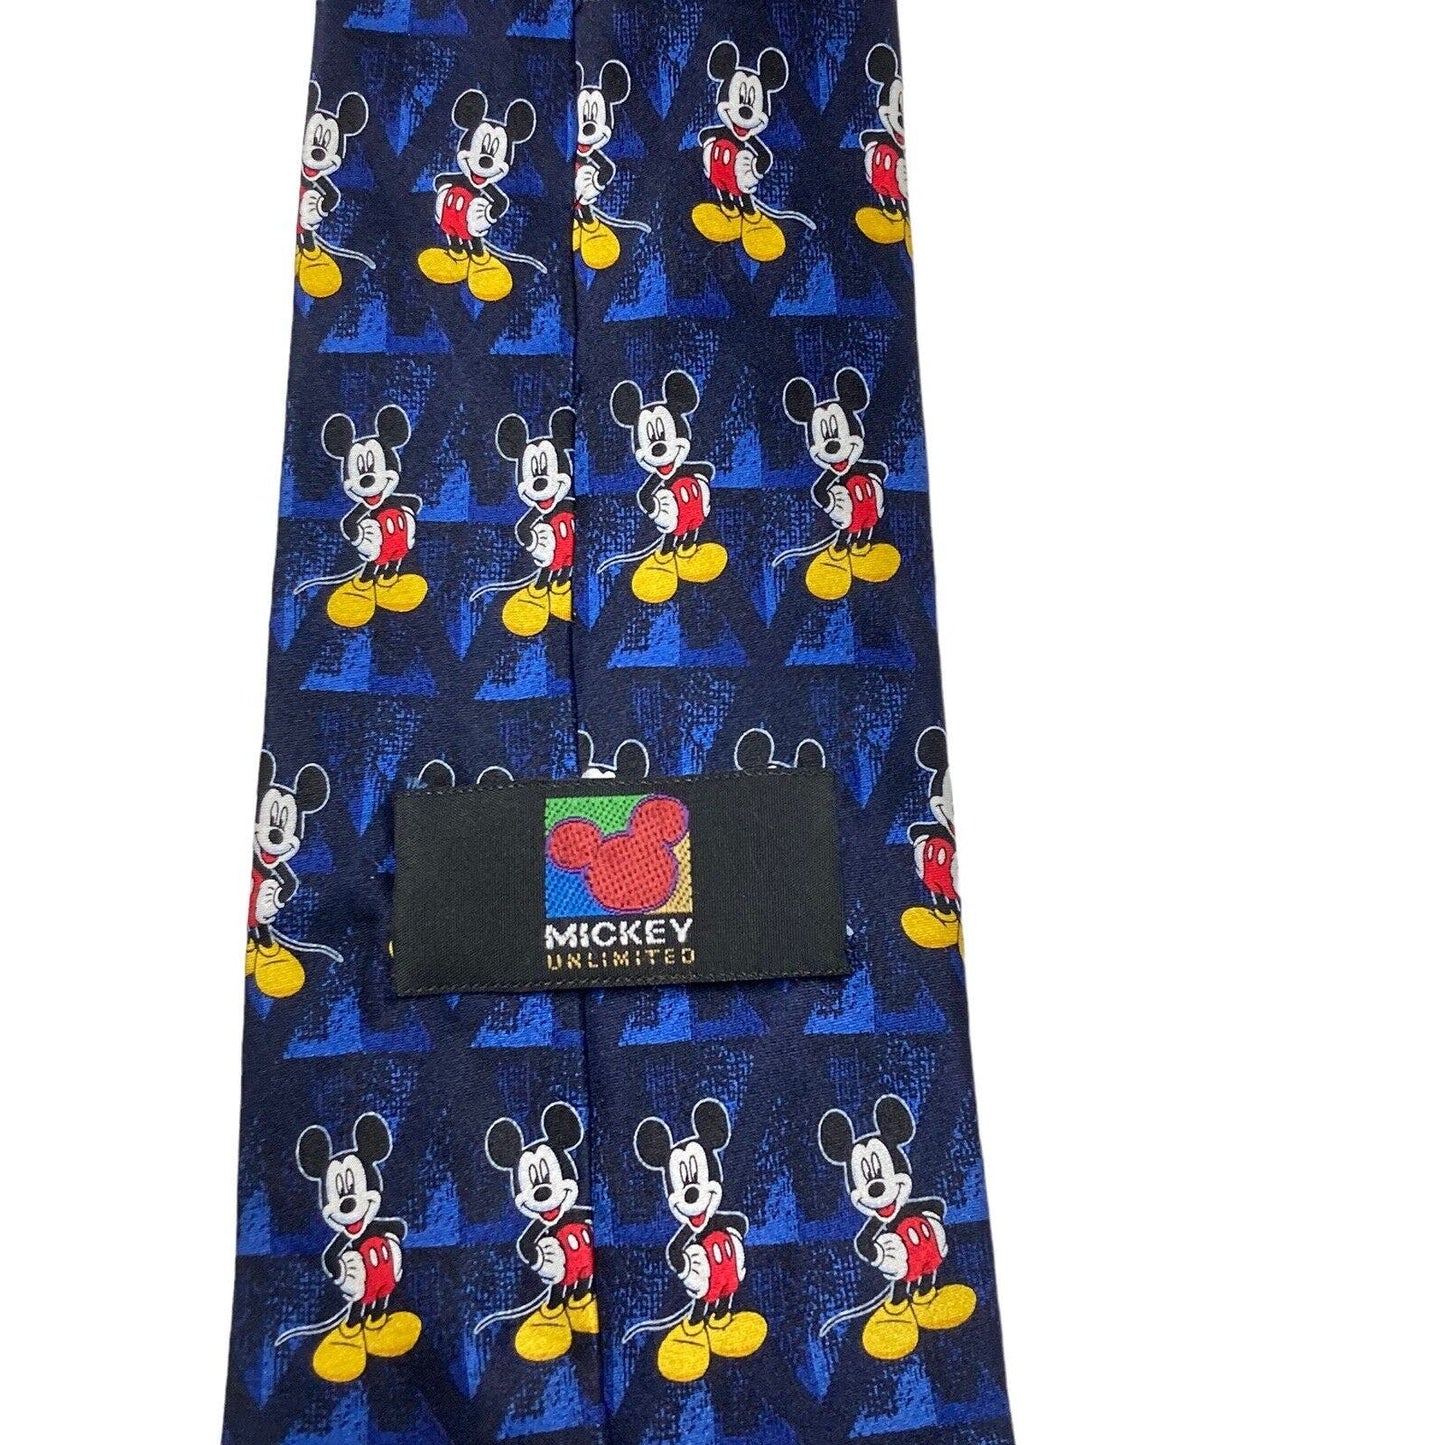 Disney Mickey Unlimited Mickey Mouse Poses Cartoon Vintage Novelty Necktie Silk